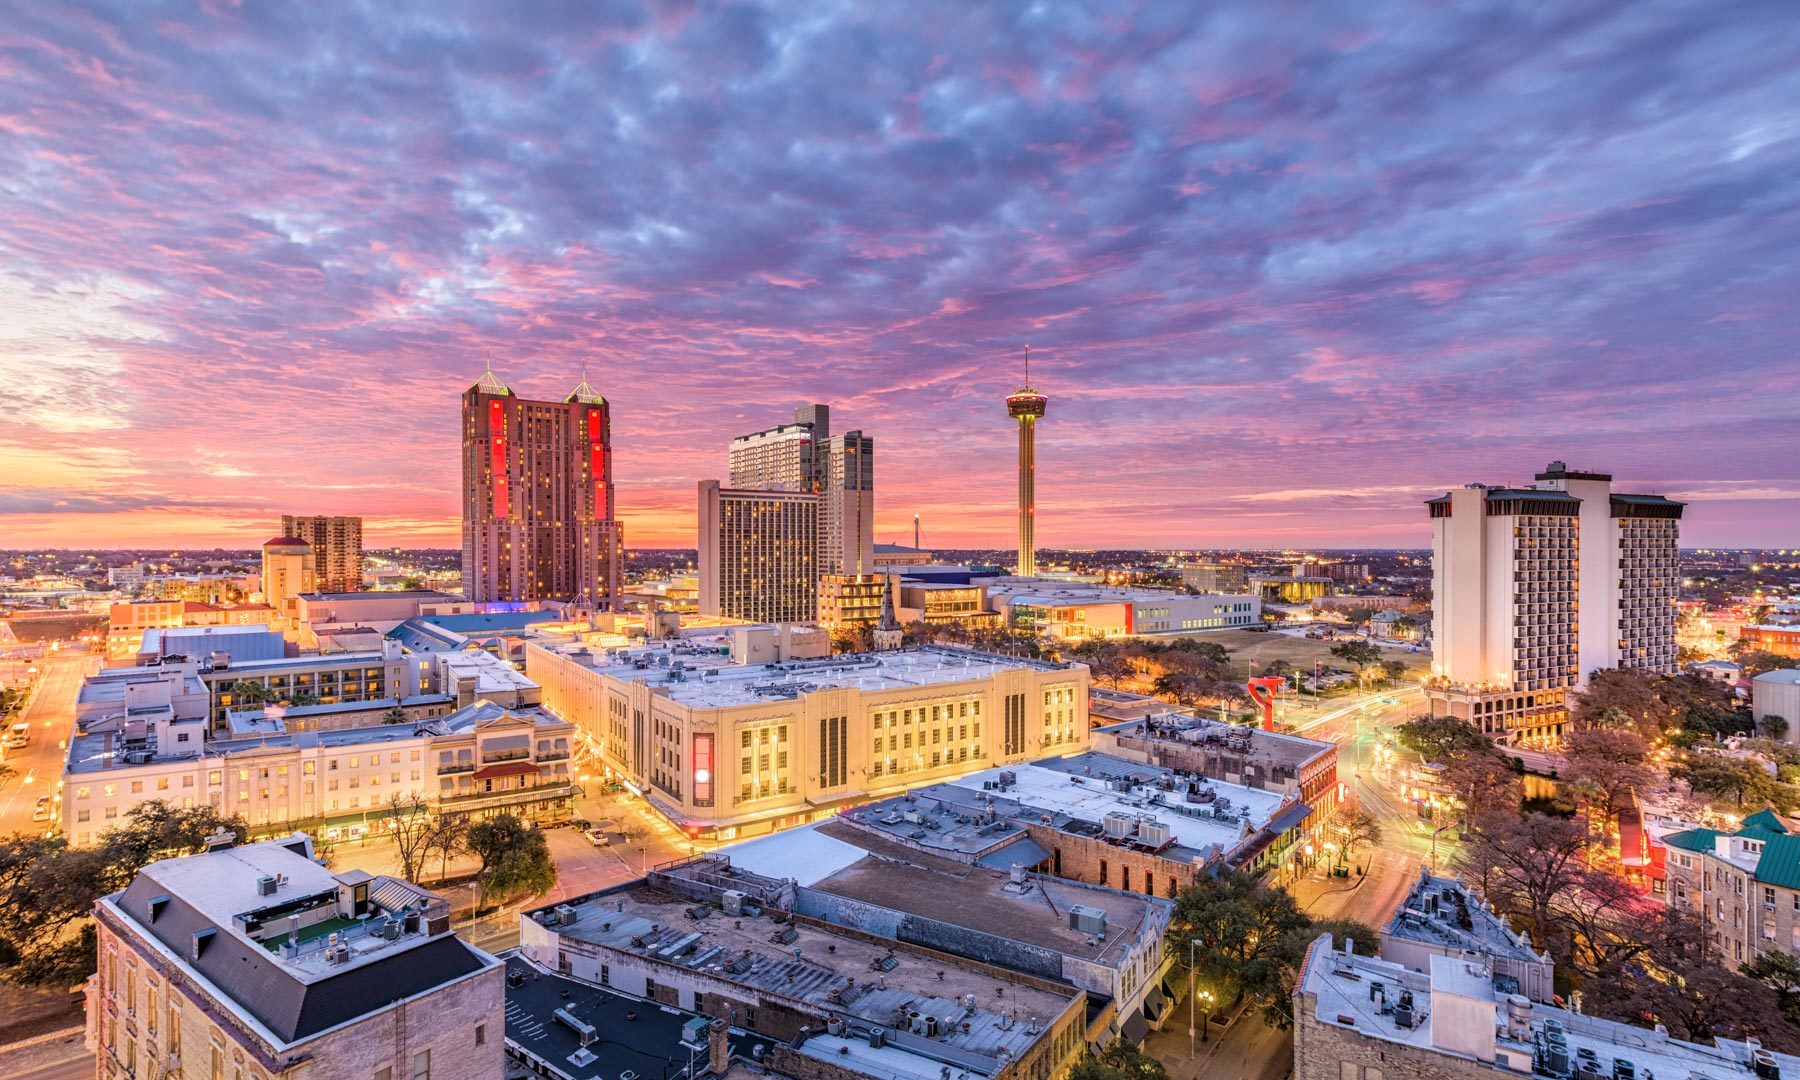 Best Boutique Hotels in San Antonio, Texas